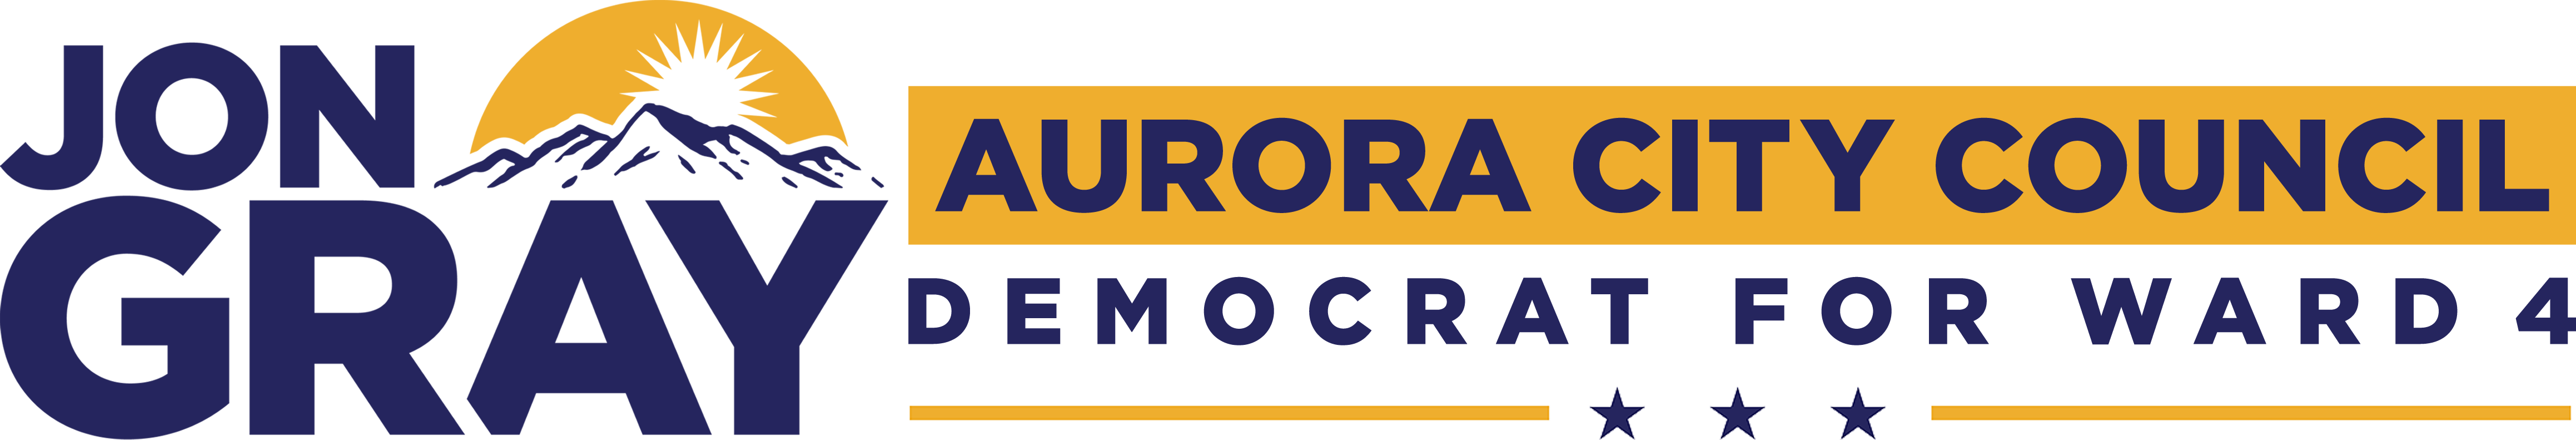 Jon Gray – Democrat for Aurora City Council Ward 4